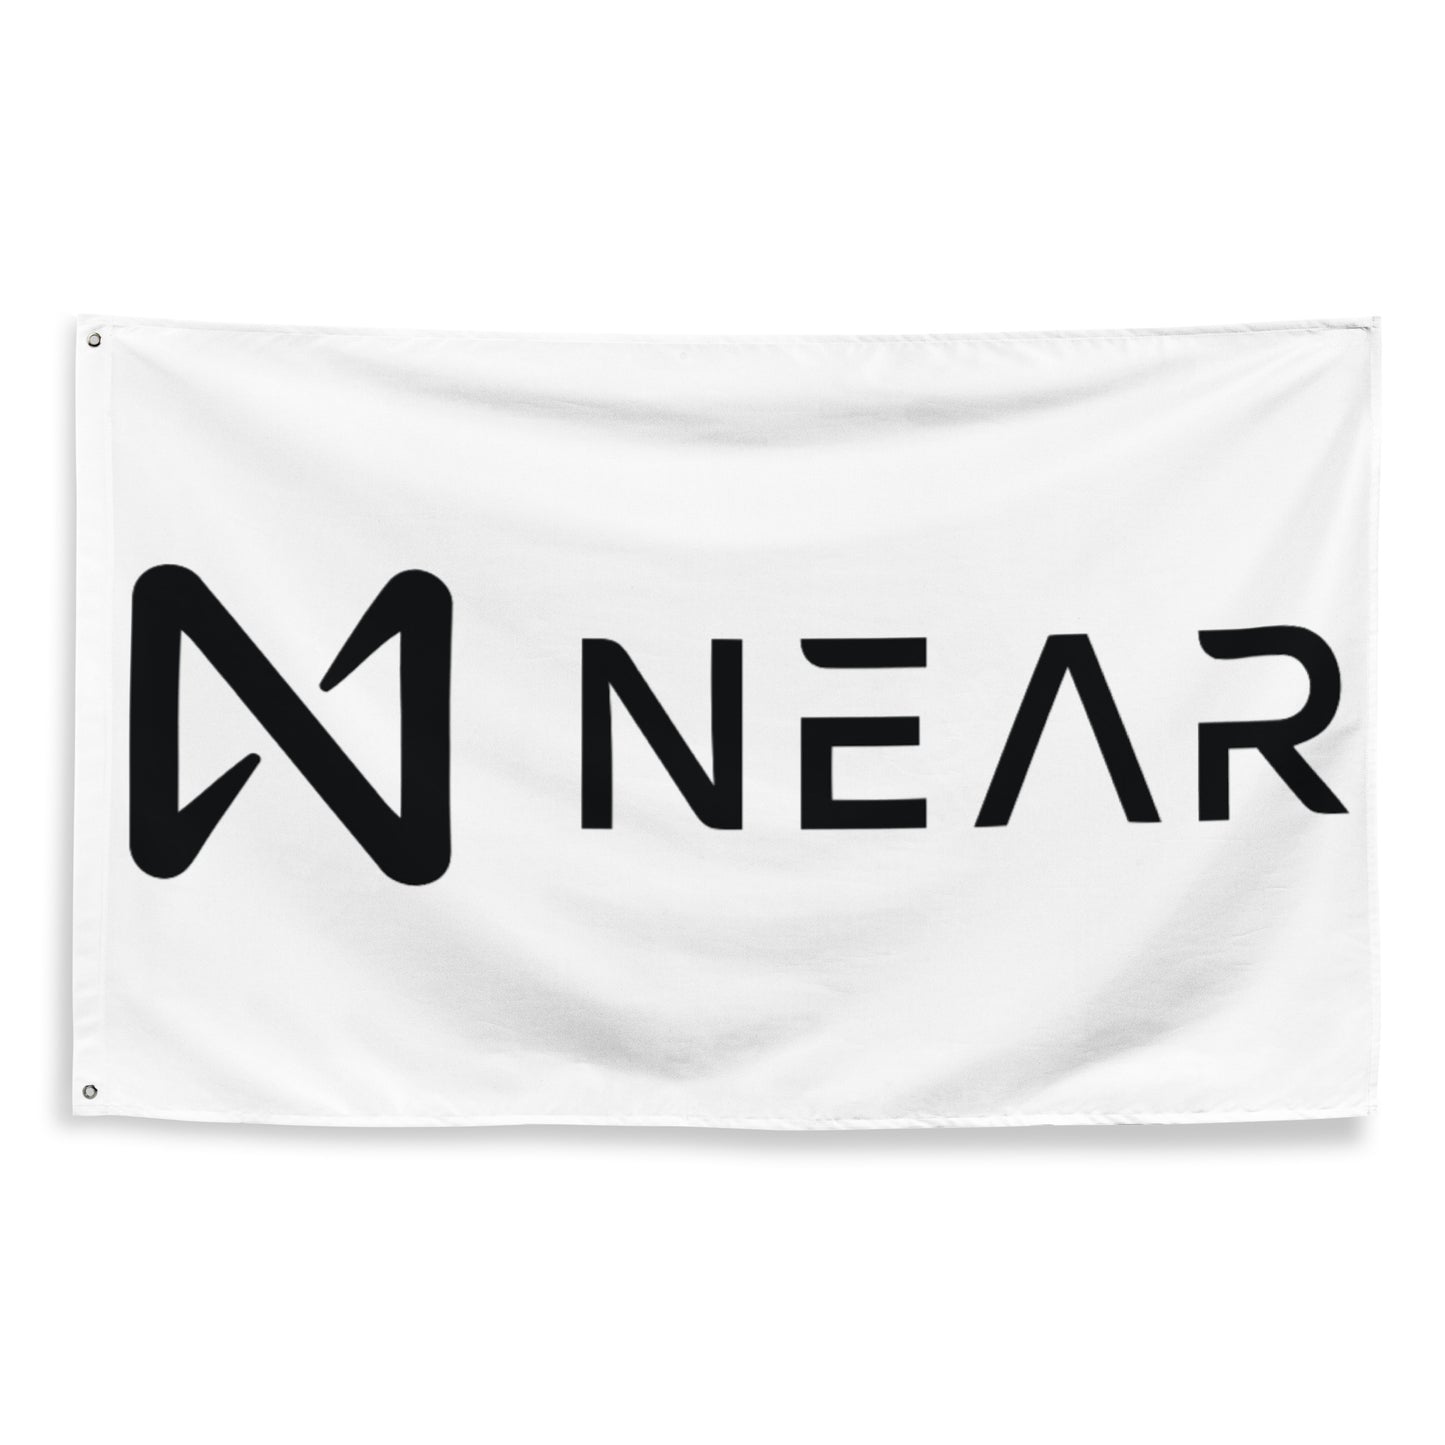 NEAR Protocol (NEAR) LOGO FLAG (V1)